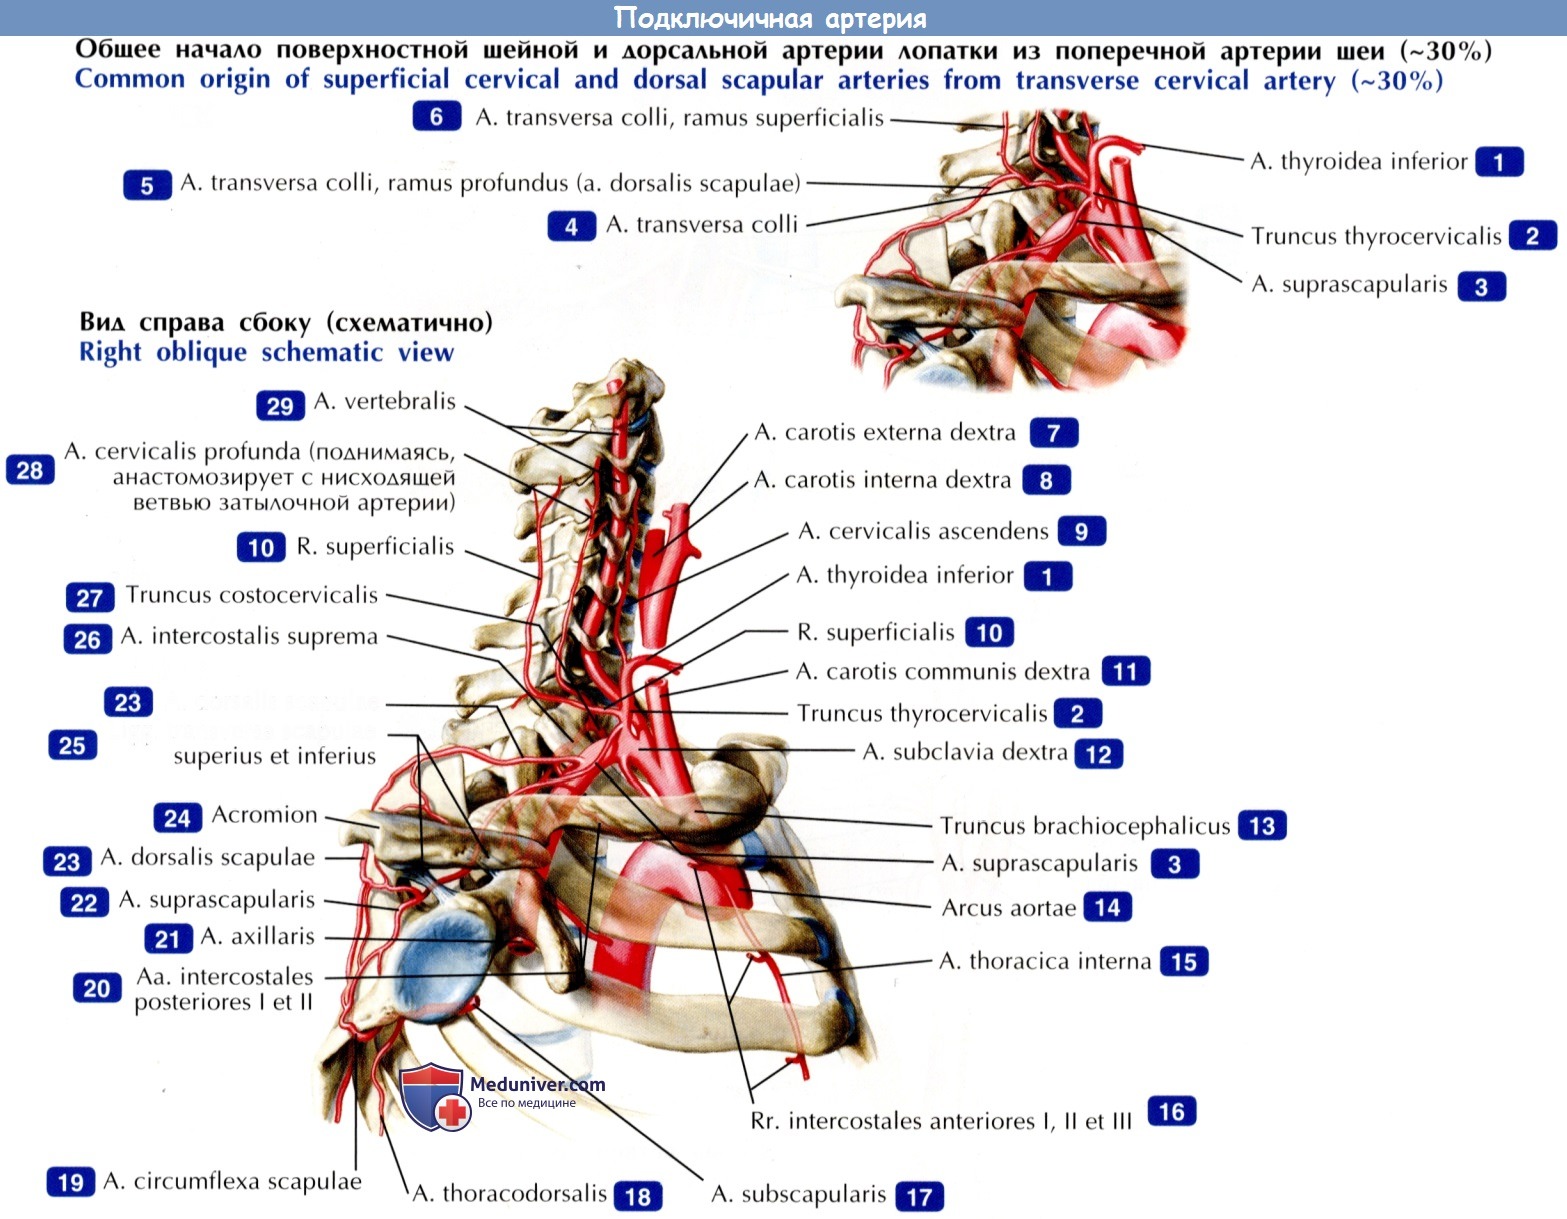 Подключичная артерия - по атласу анатомии